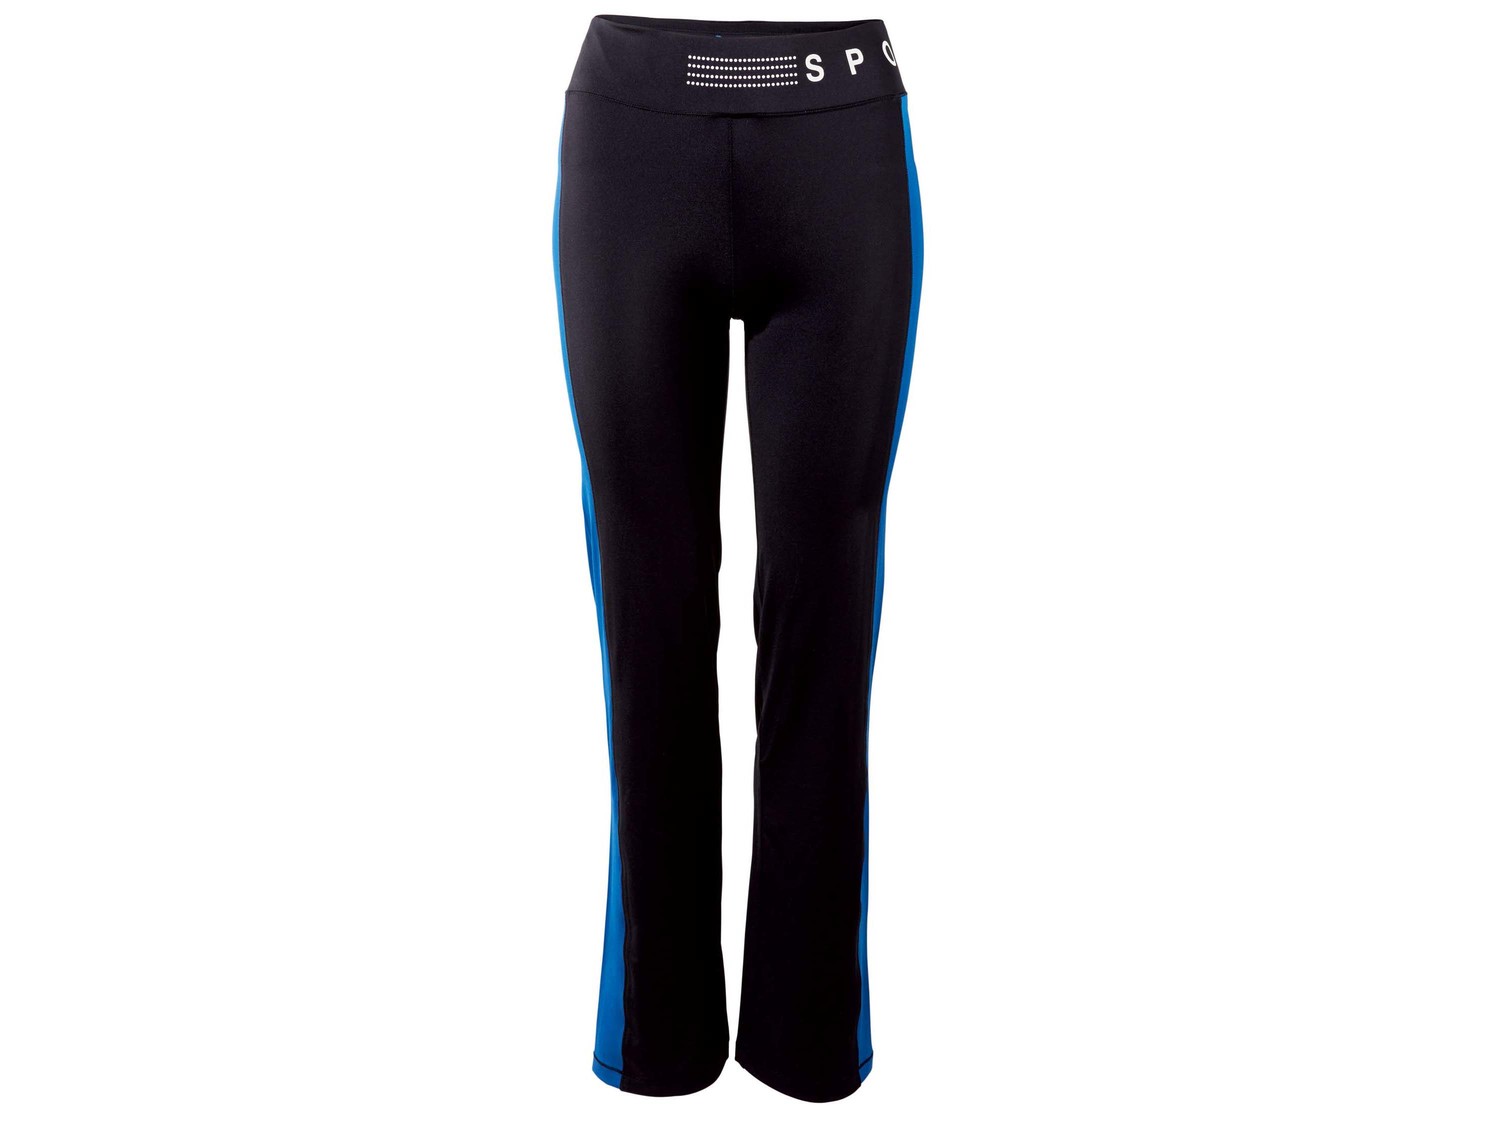 Pantaloni sportivi da donna Crivit, prezzo 7.99 &#8364;  
Misure: XS-L
- Oeko tex NEW